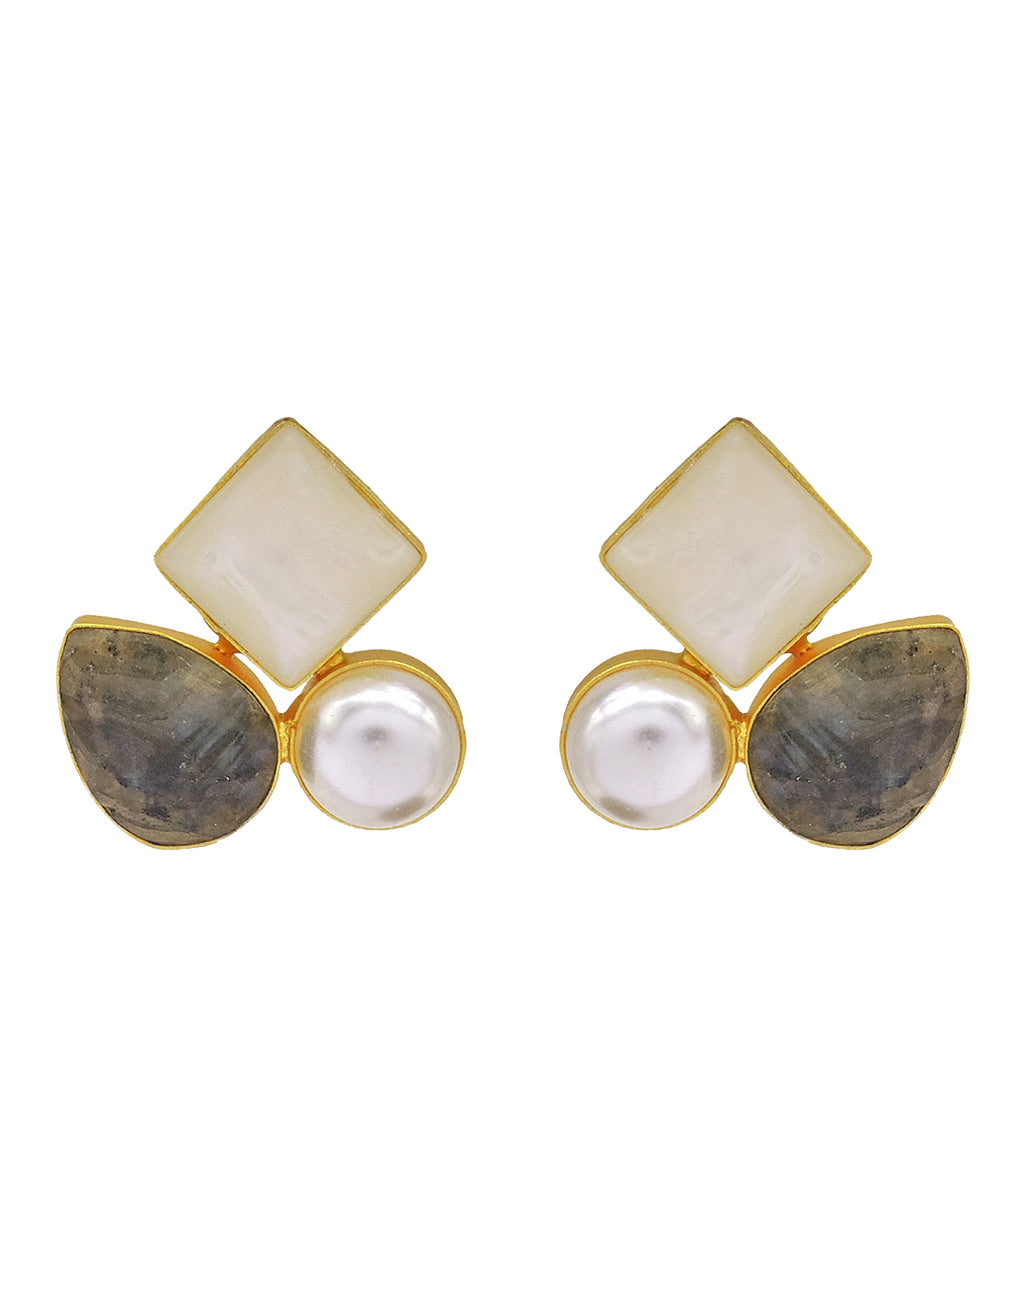 Labradorite Diamond Earrings - Statement Earrings - Gold-Plated & Hypoallergenic - Made in India - Dubai Jewellery - Dori